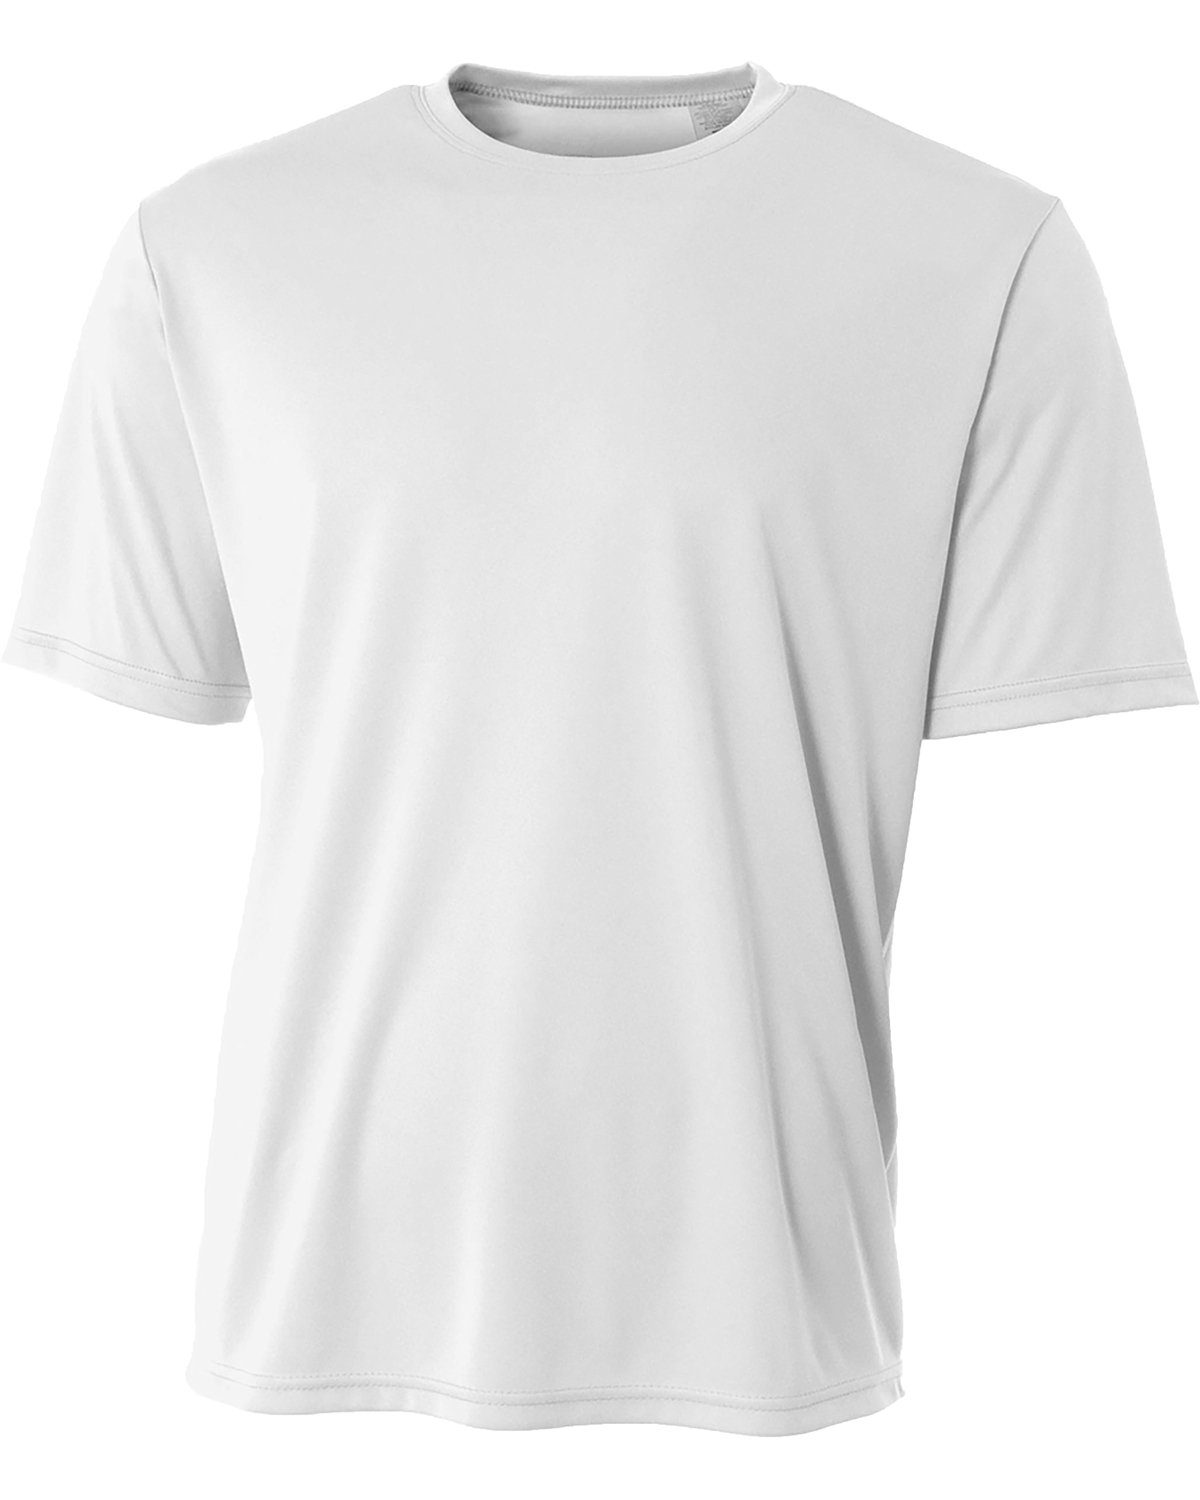 A4 Men's Sprint Performance T-Shirt WHITE 